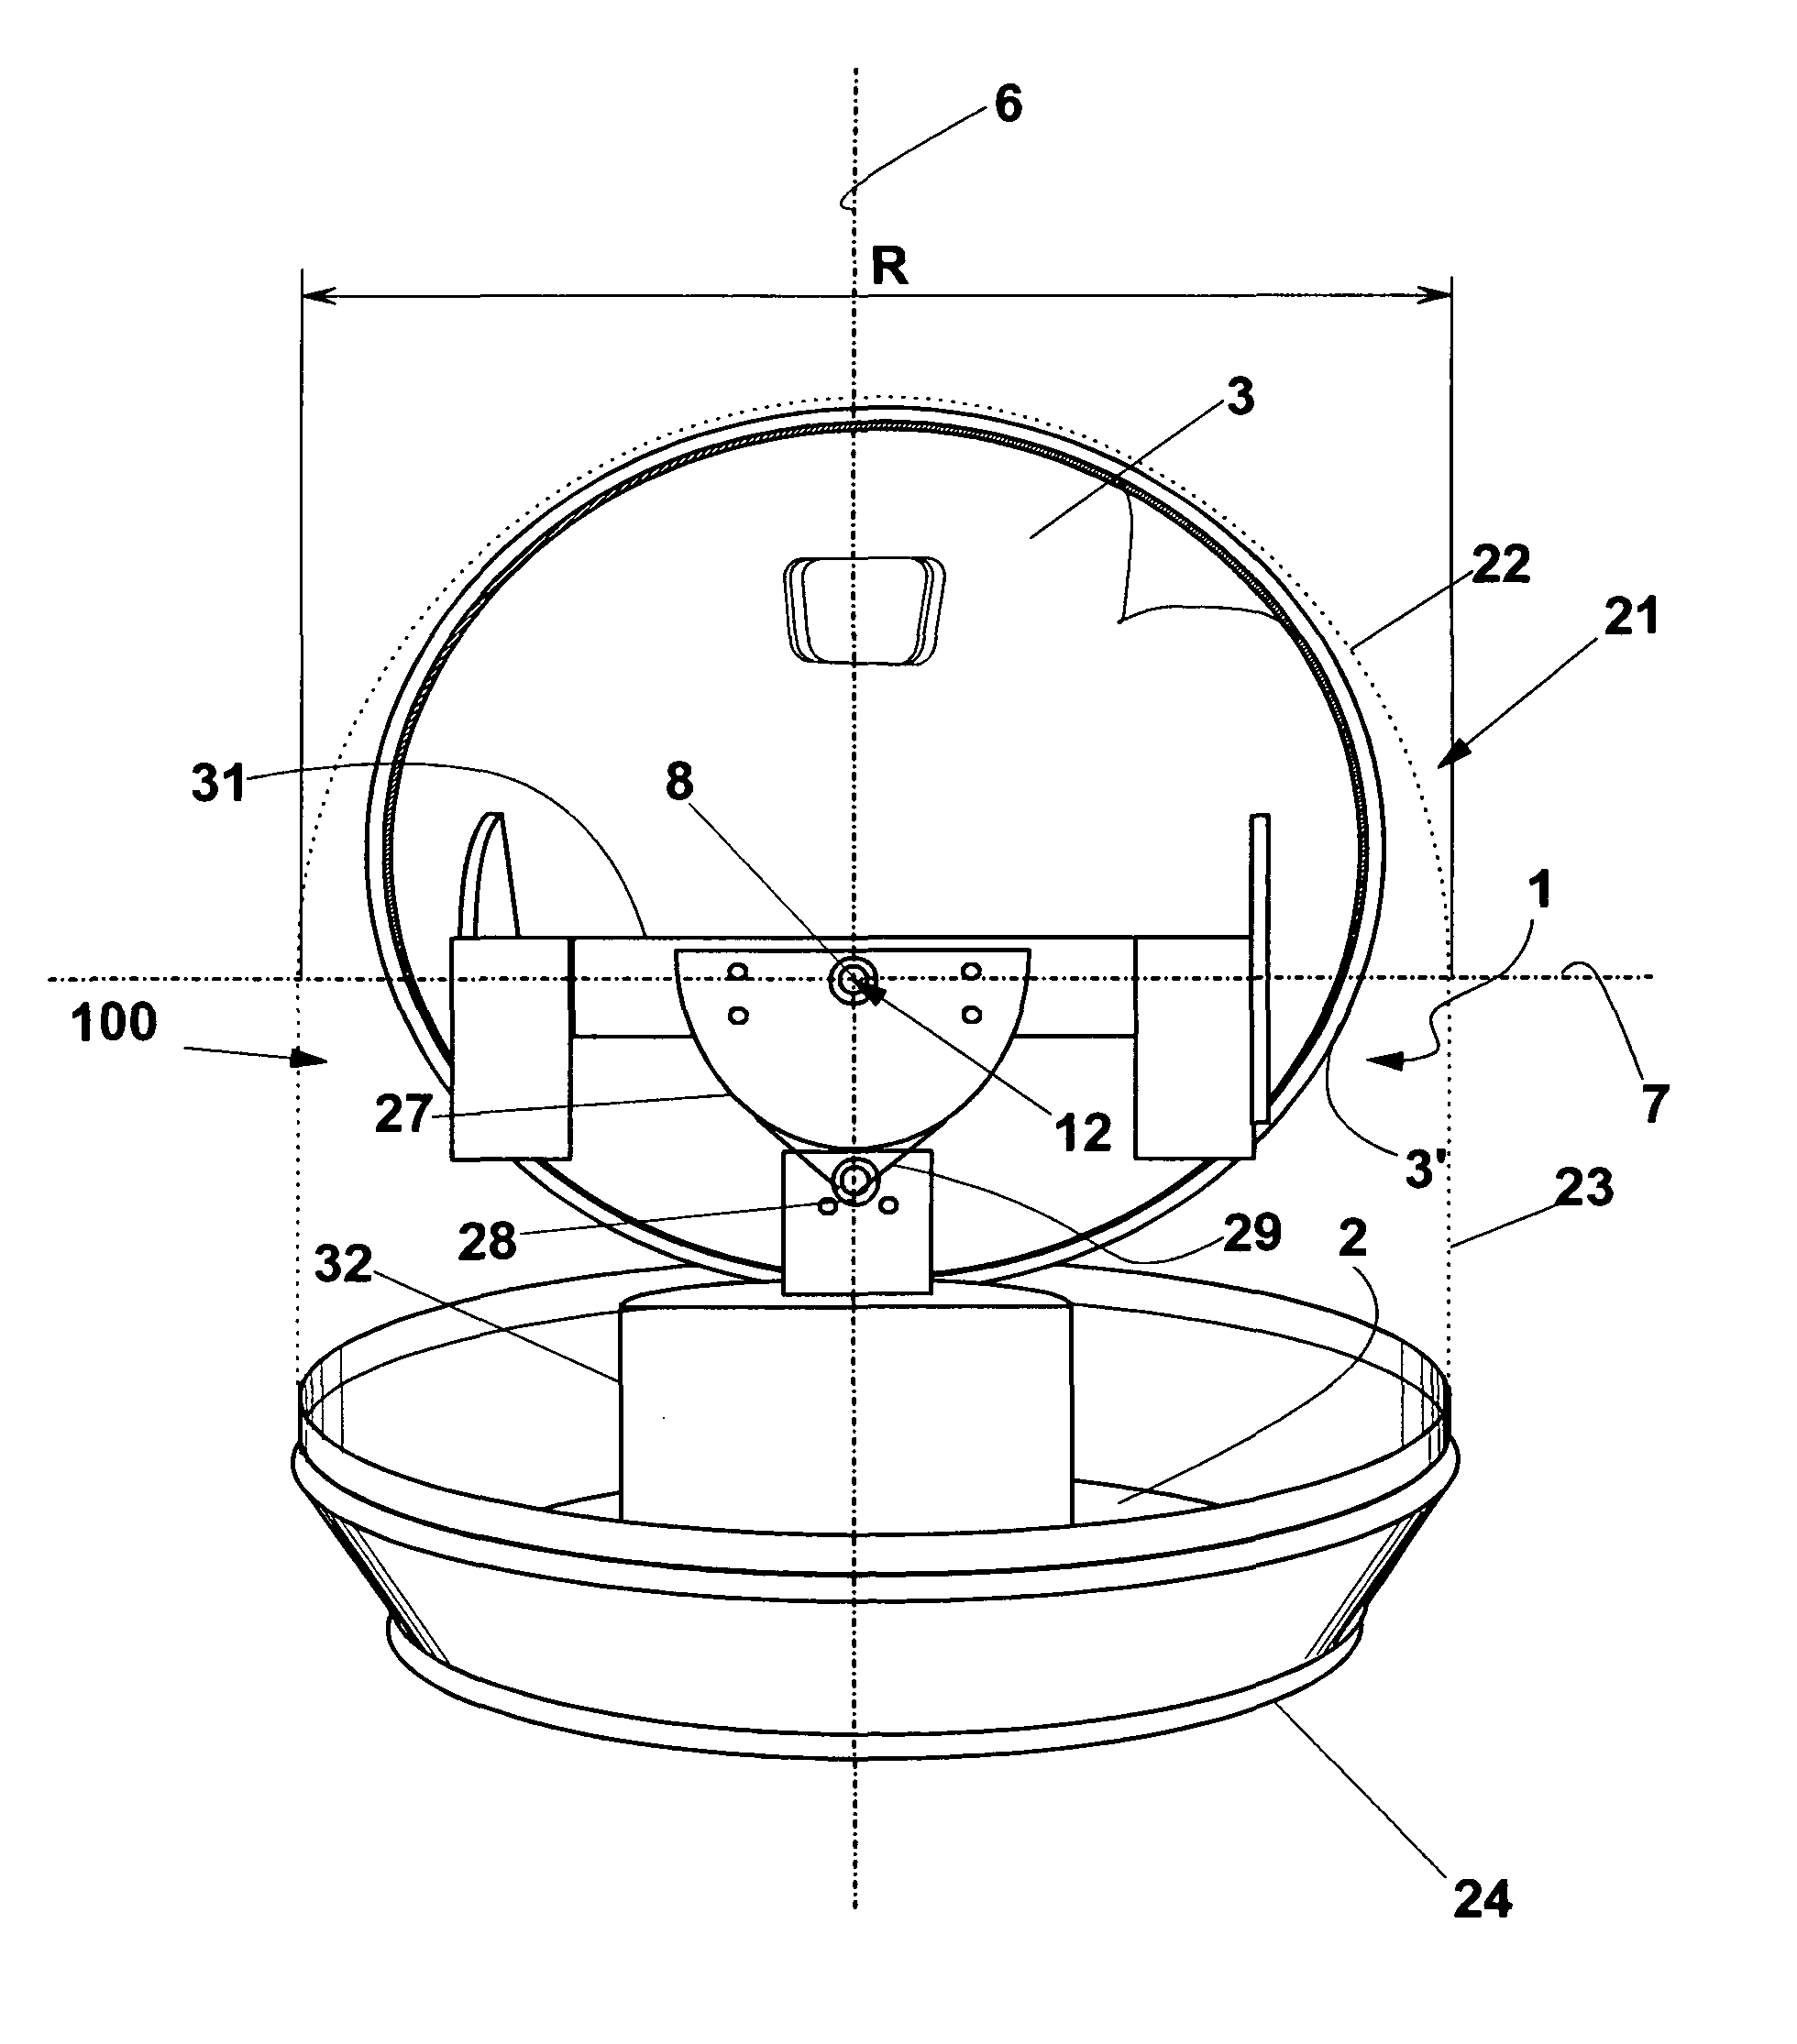 Three-axes aerial dish pointing device with minimum radome encumbrance